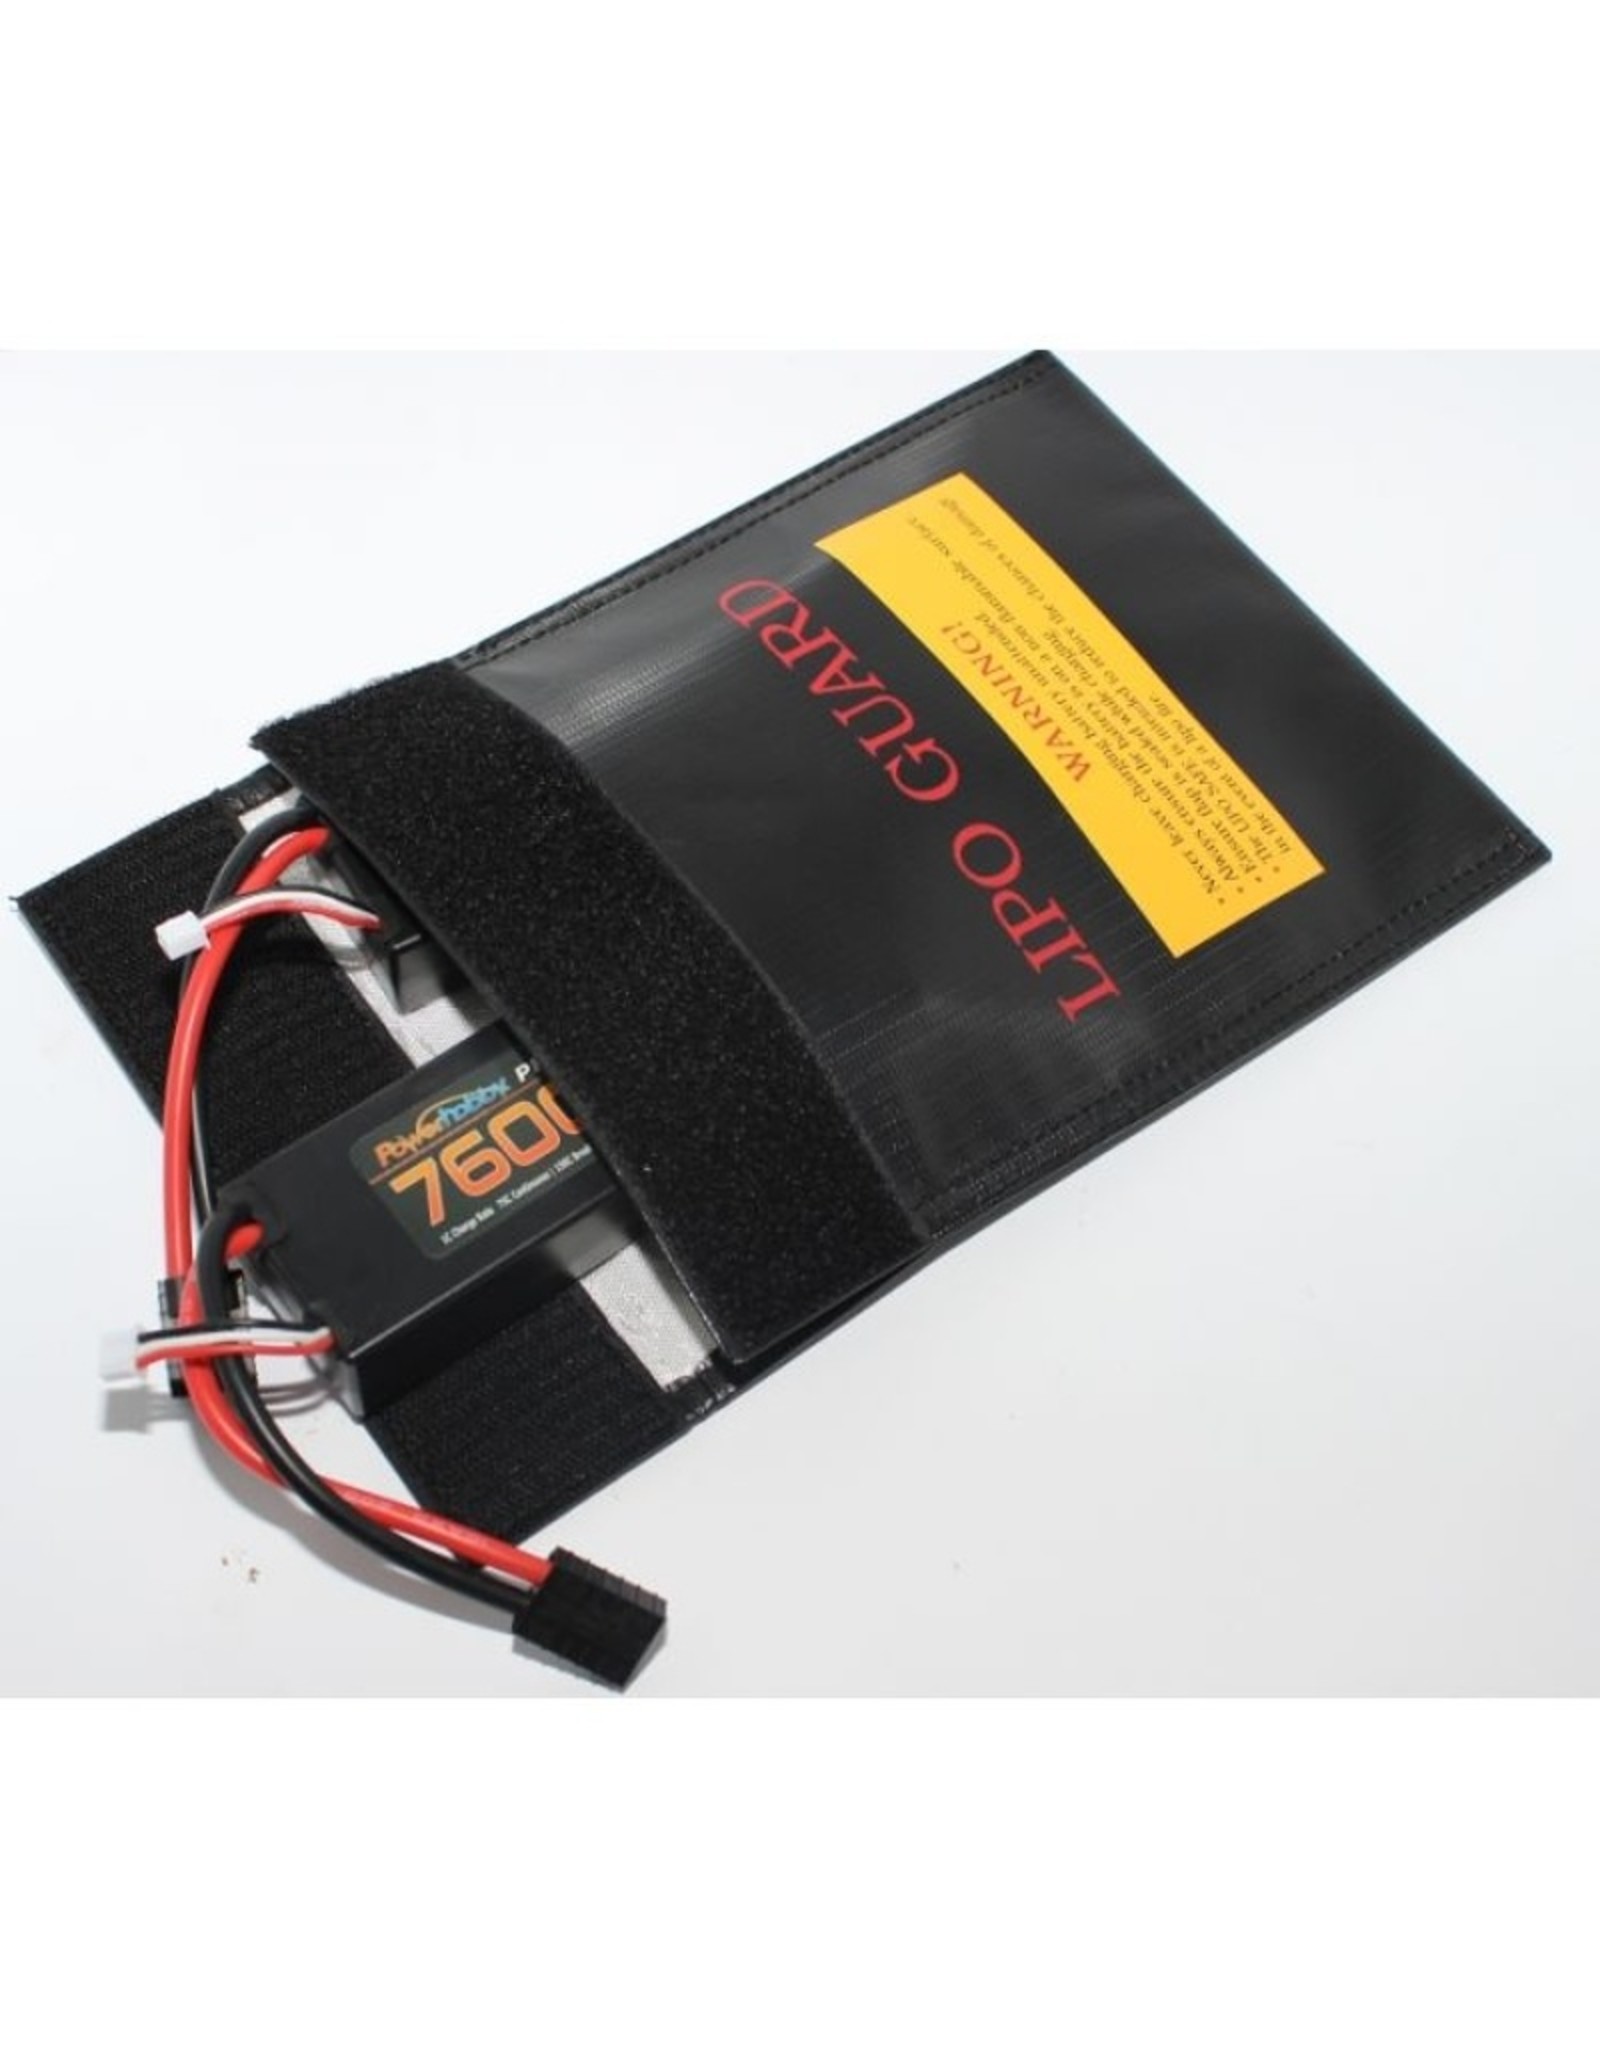 POW180  PowerHobby RC Lipo Battery Fireproof Bag Small